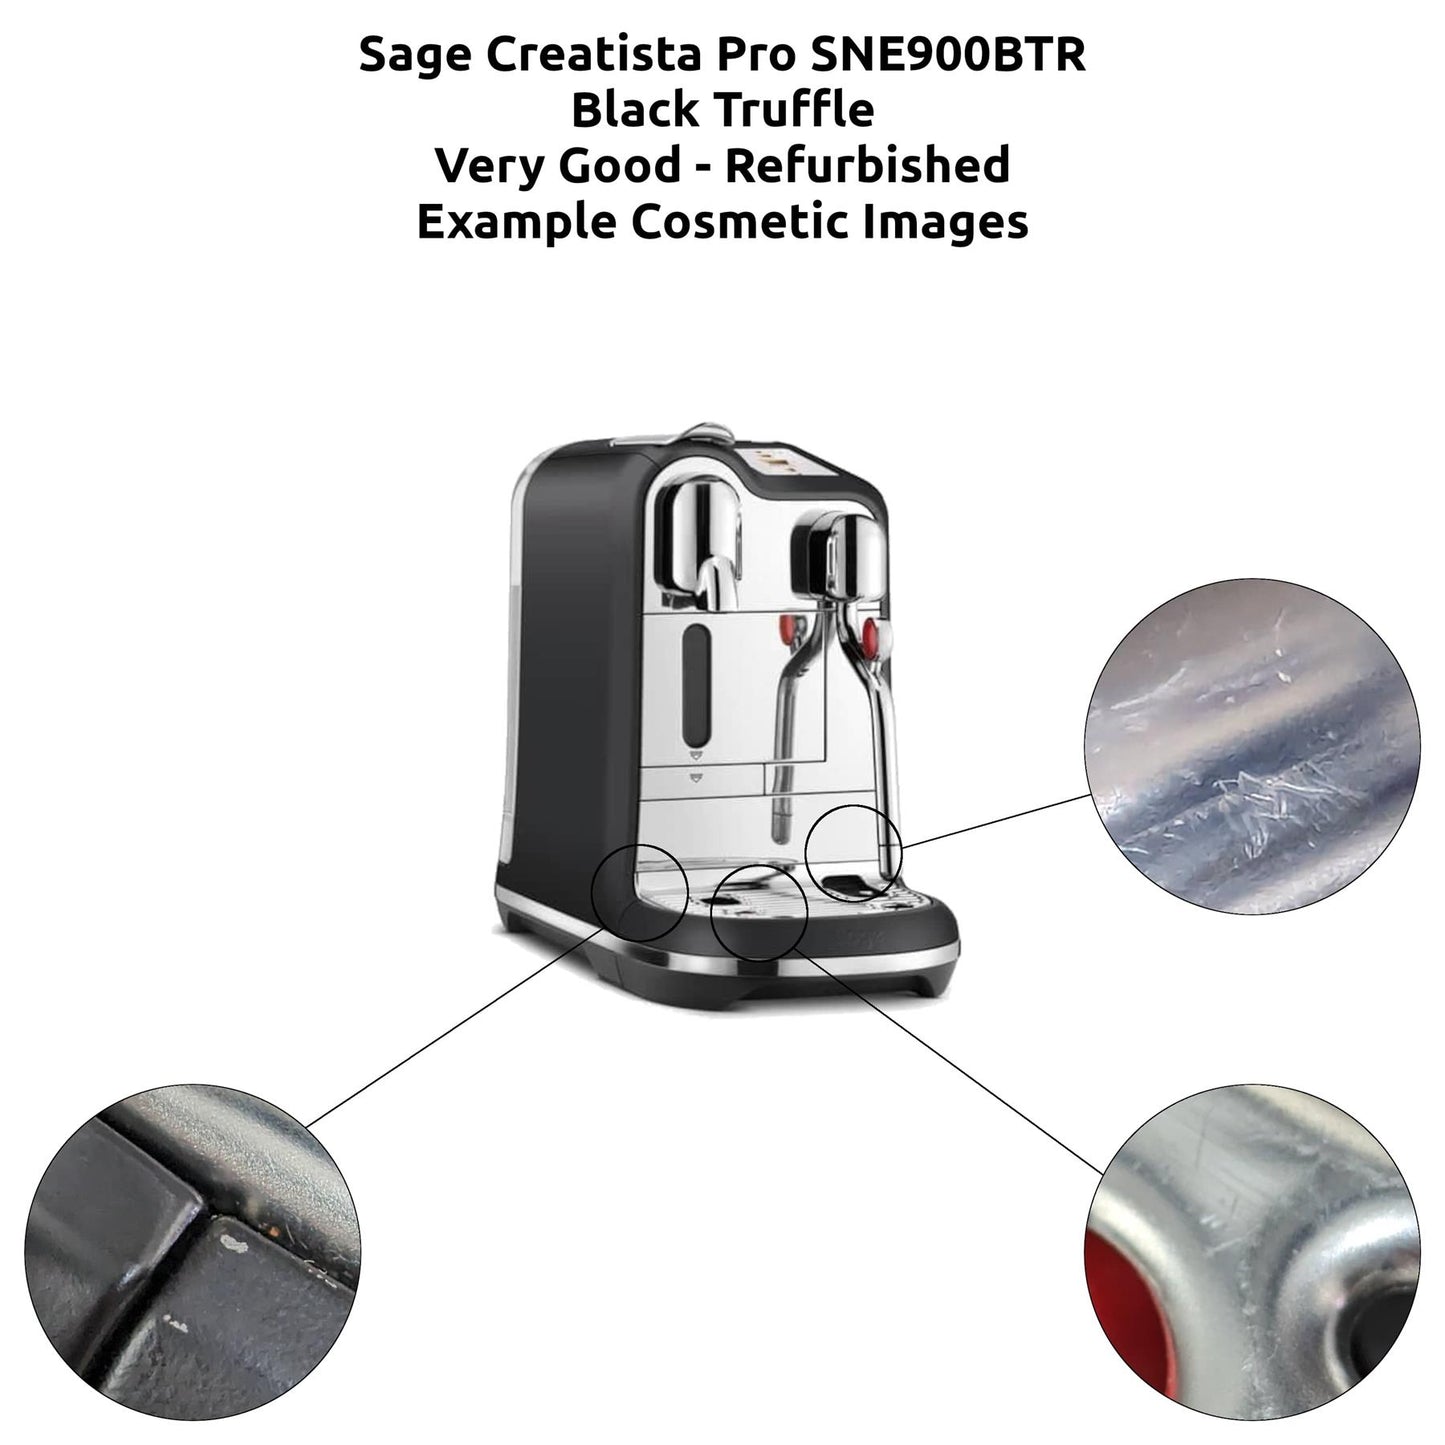 Sage Creatista Pro SNE900 Coffee Machine